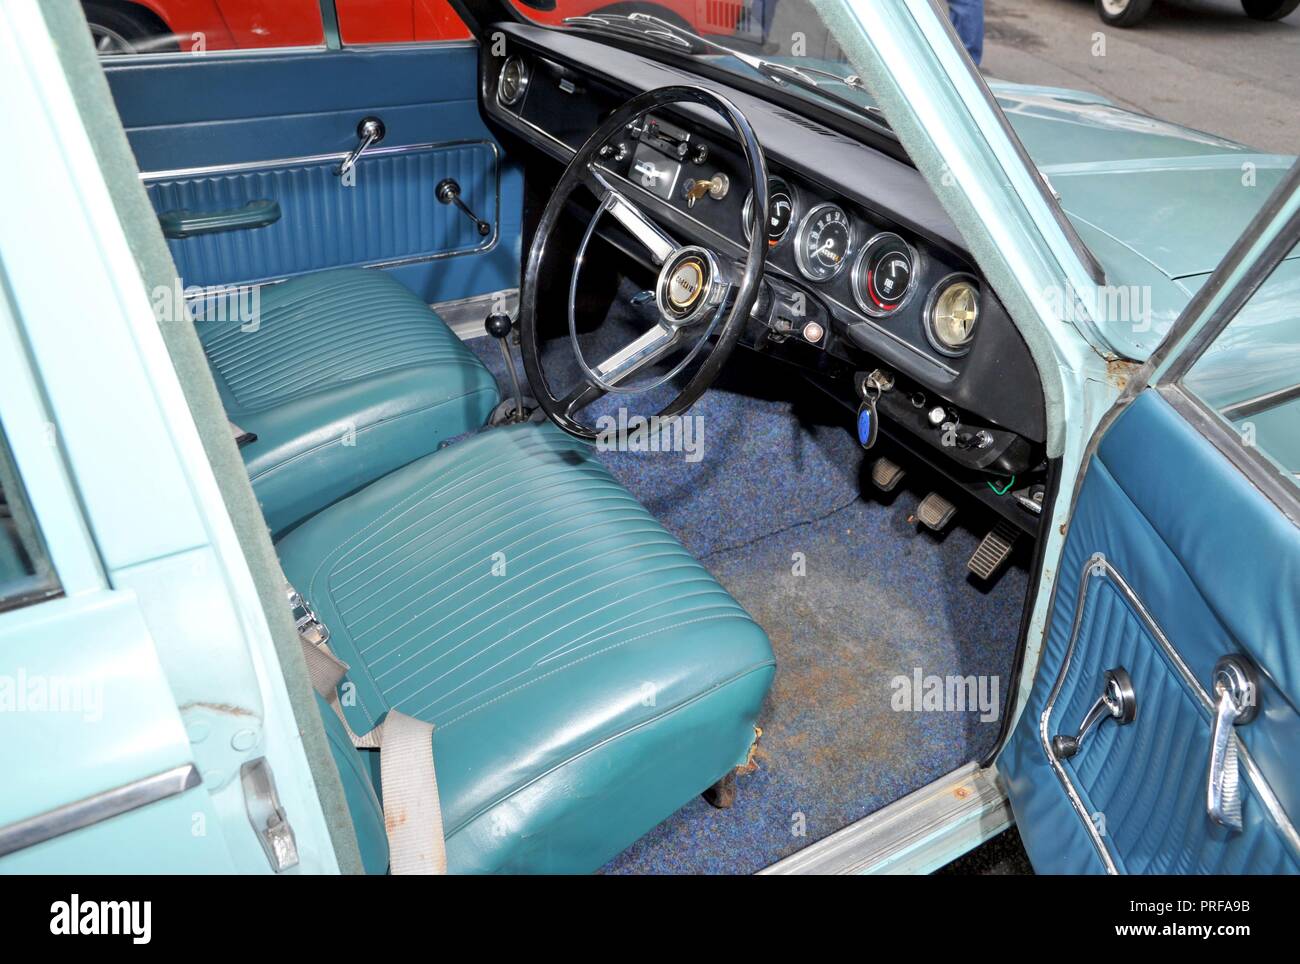 Ford Corsair British classic car mit abgesenkter Federung Stockfoto